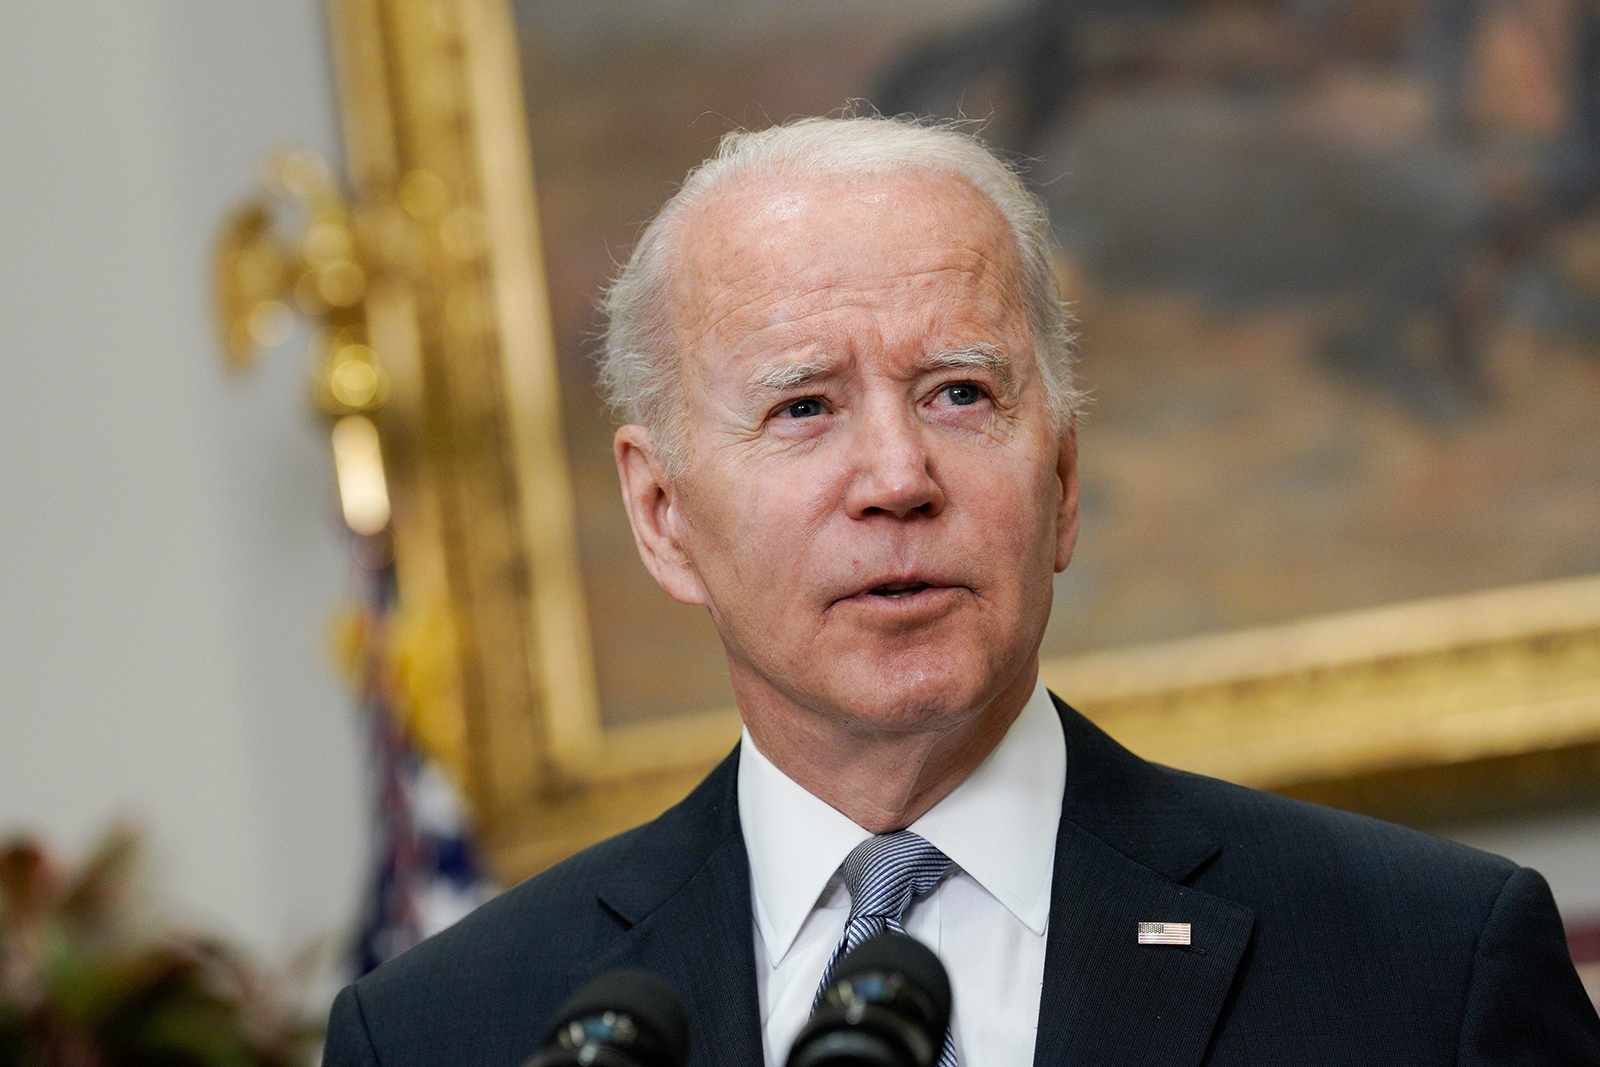 Joe Biden speaks in Washington, D.C., on Thursday April 21, 2022. 